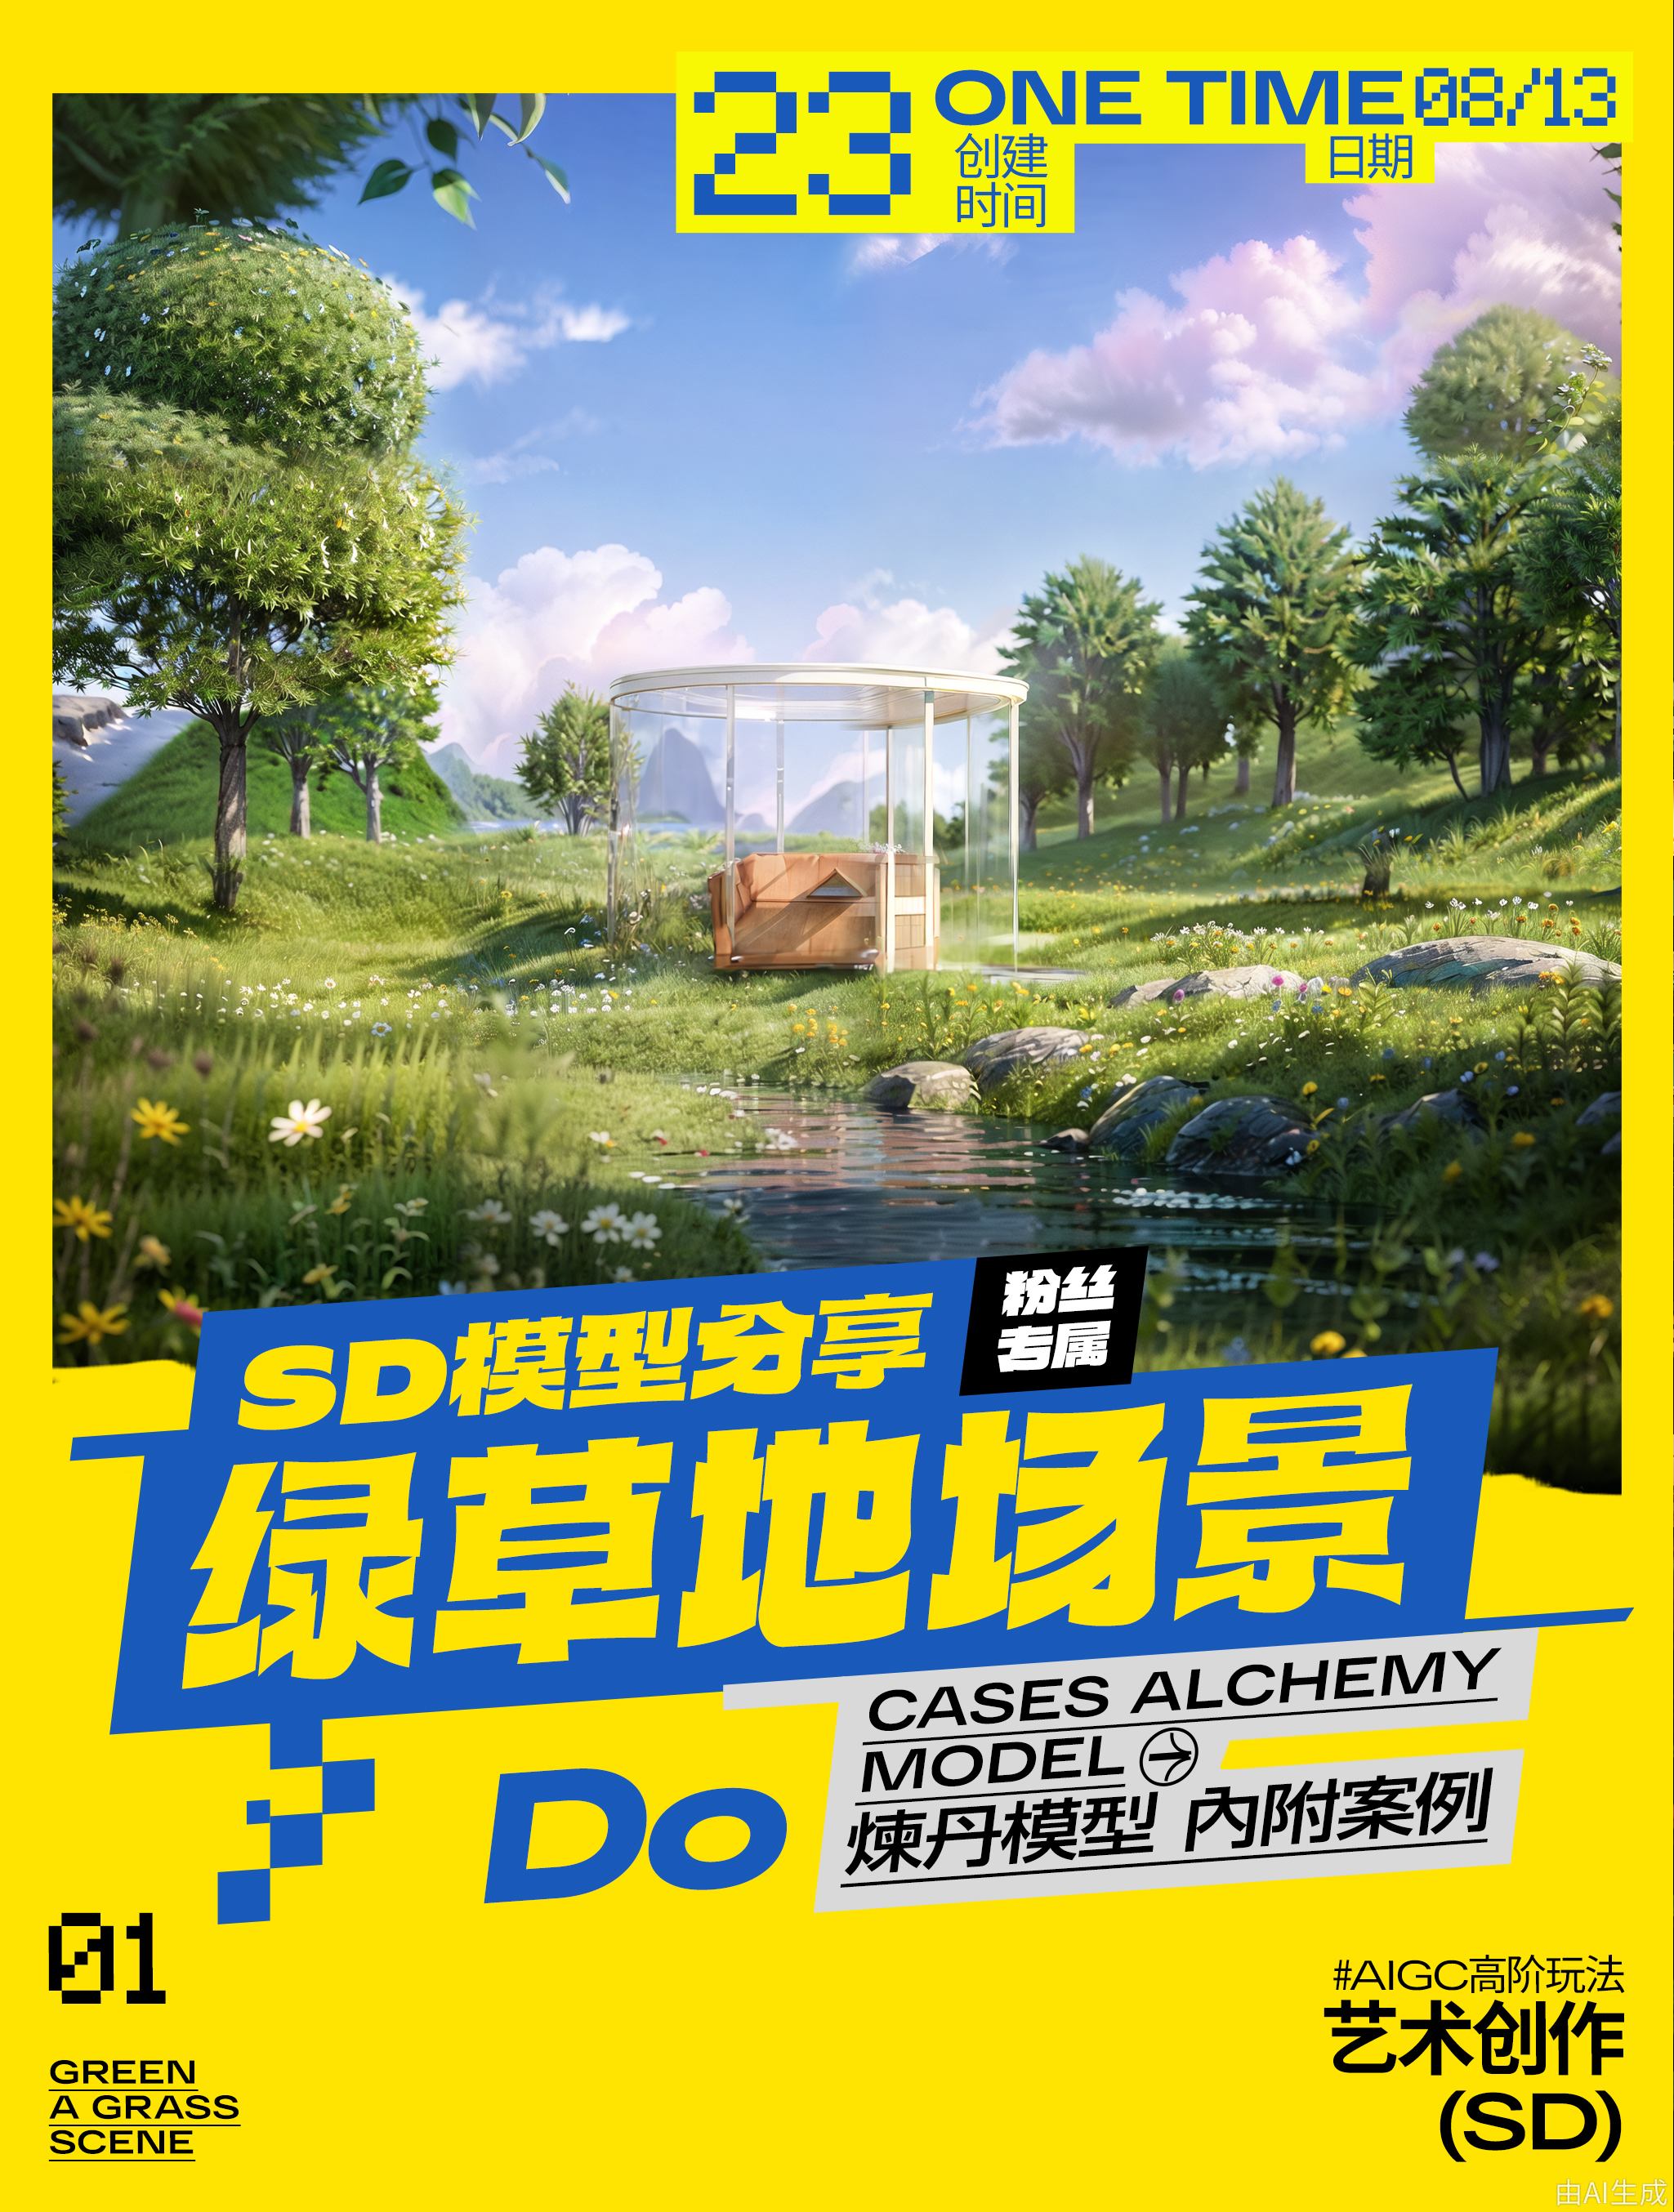 3D卡通草地模型⋅cartoon grass scene model